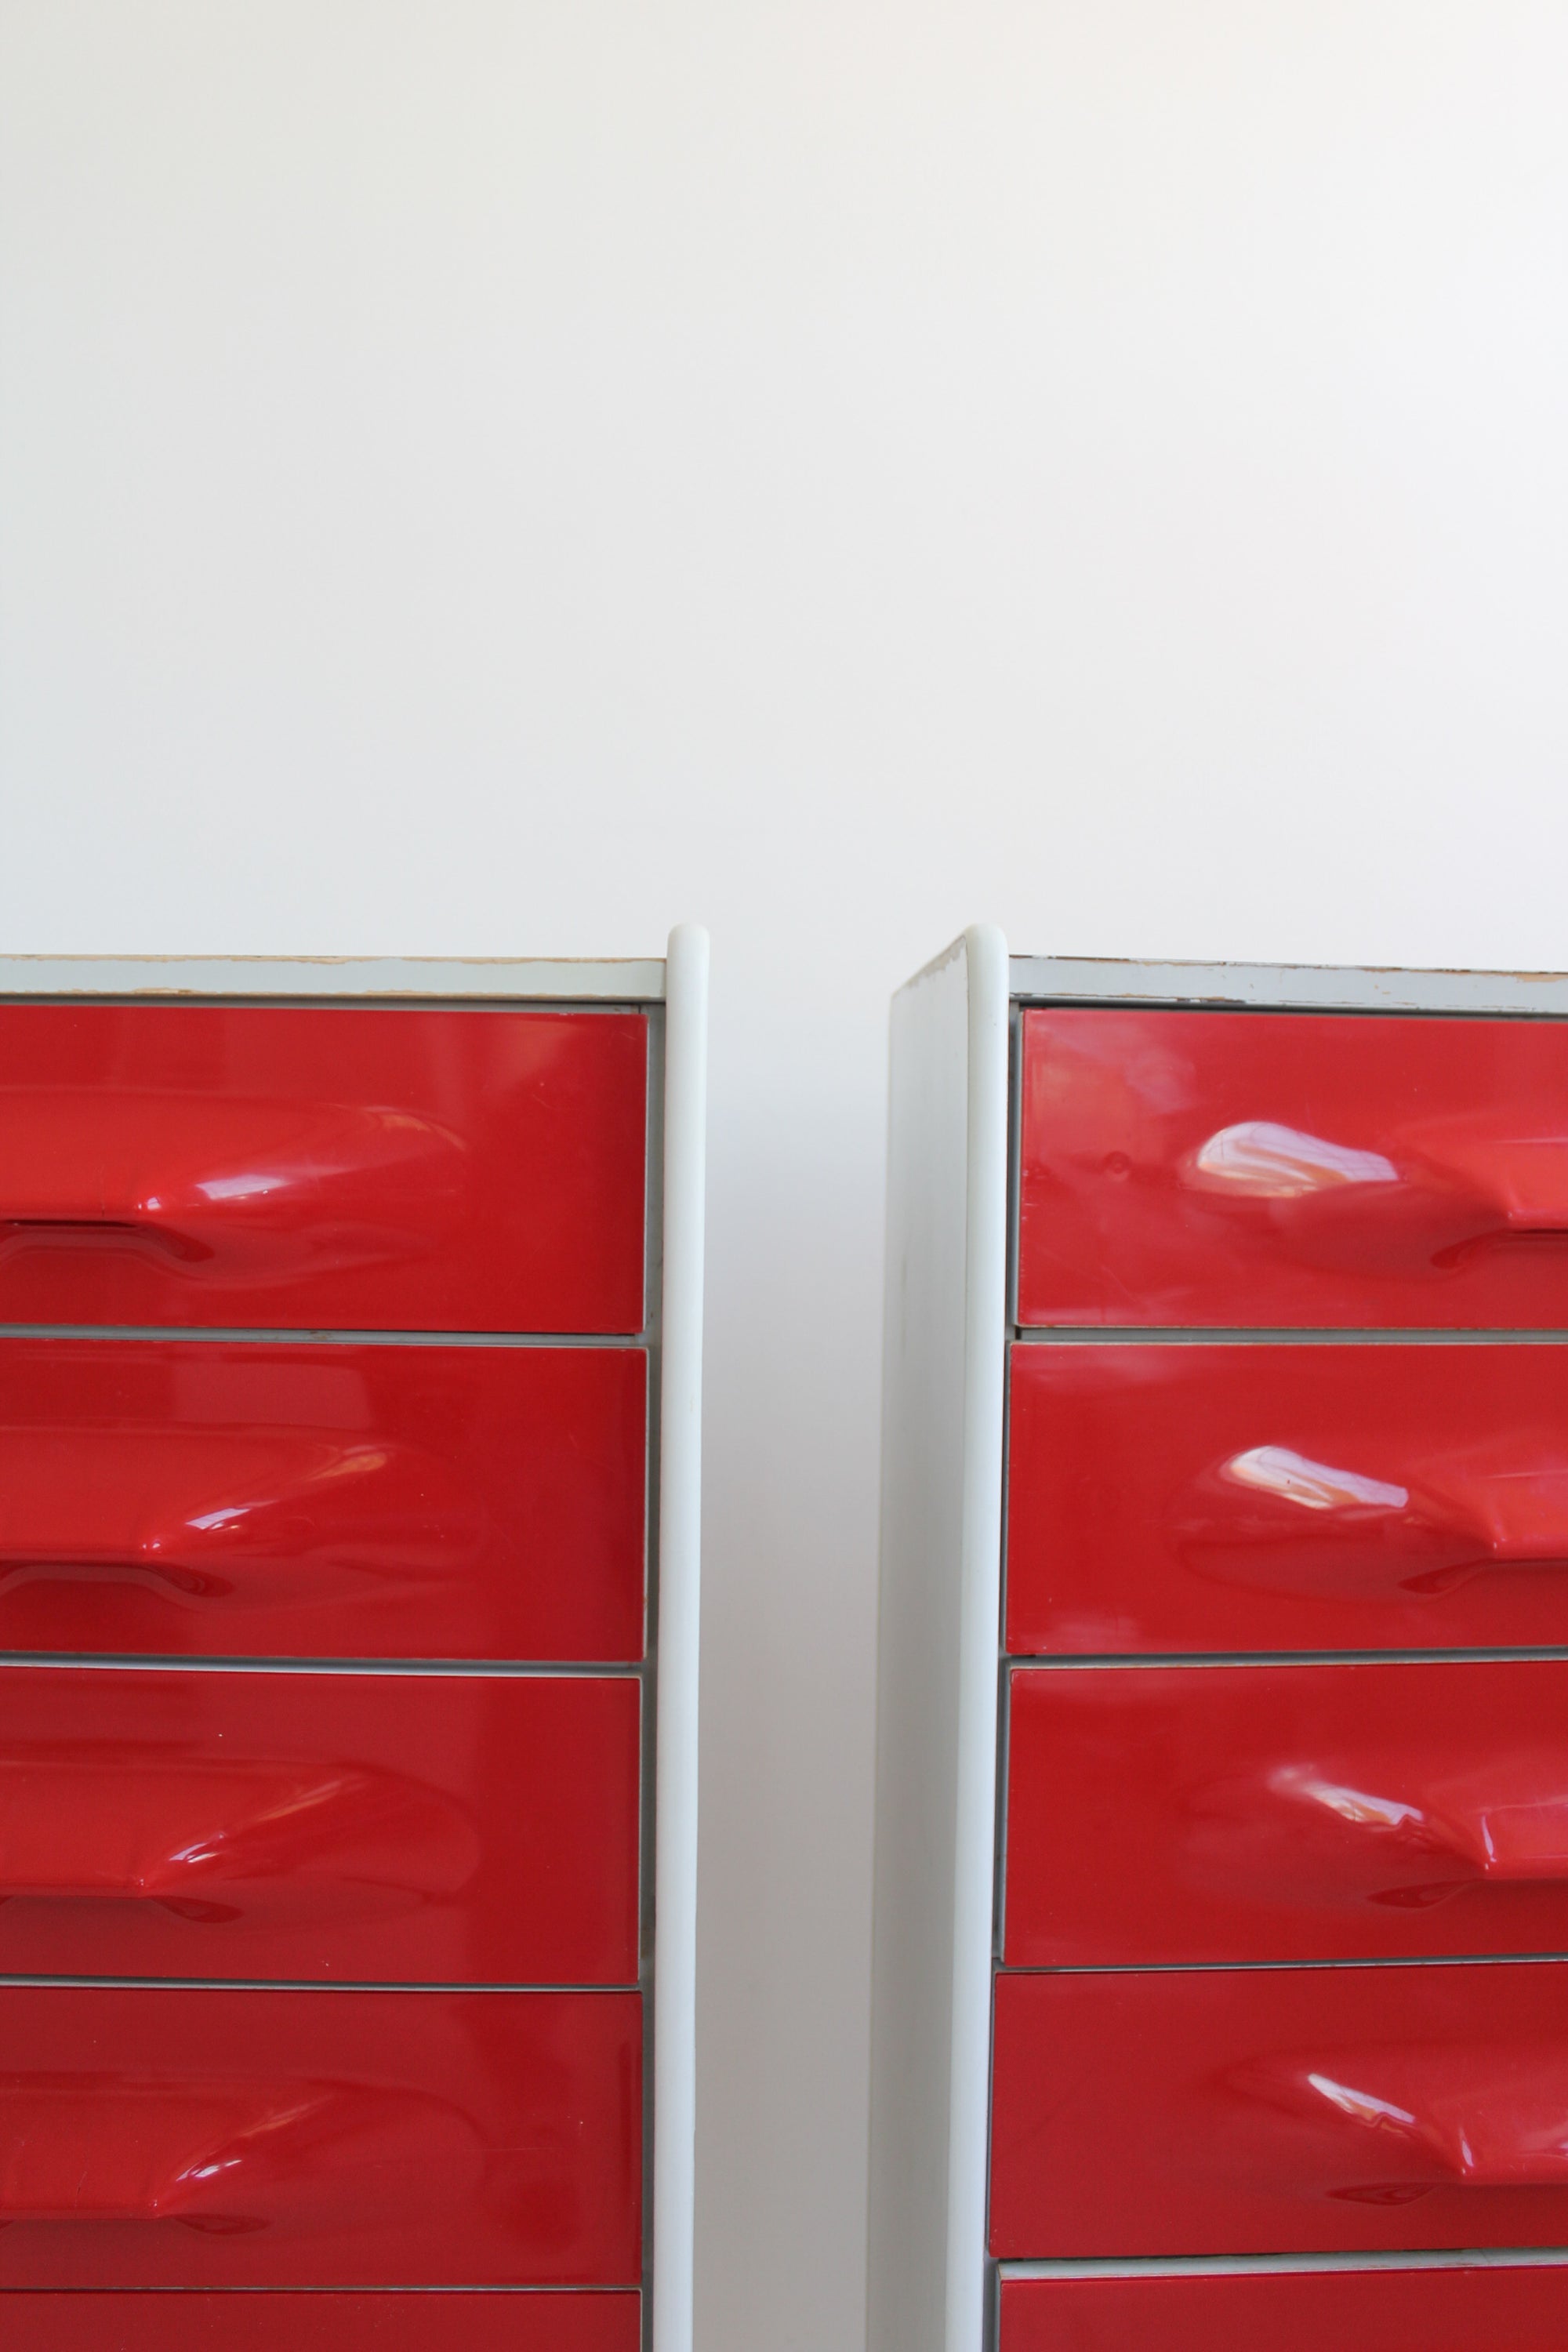 Red Highboy Dresser by Giovanni Maur for Treco